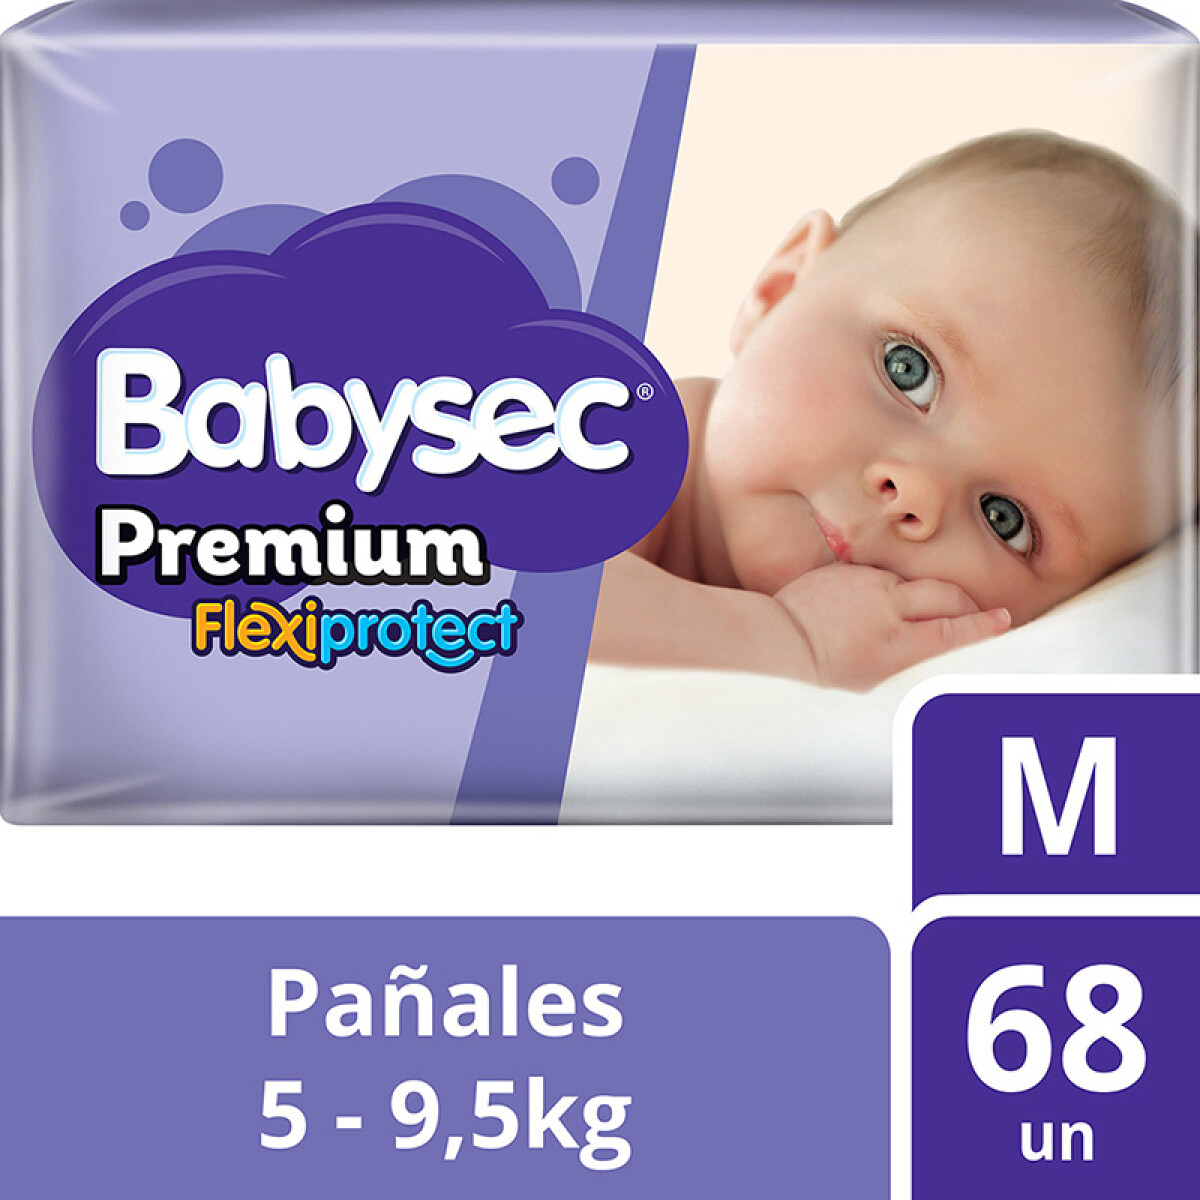 Baby Sec pañales Premium - Mx68 